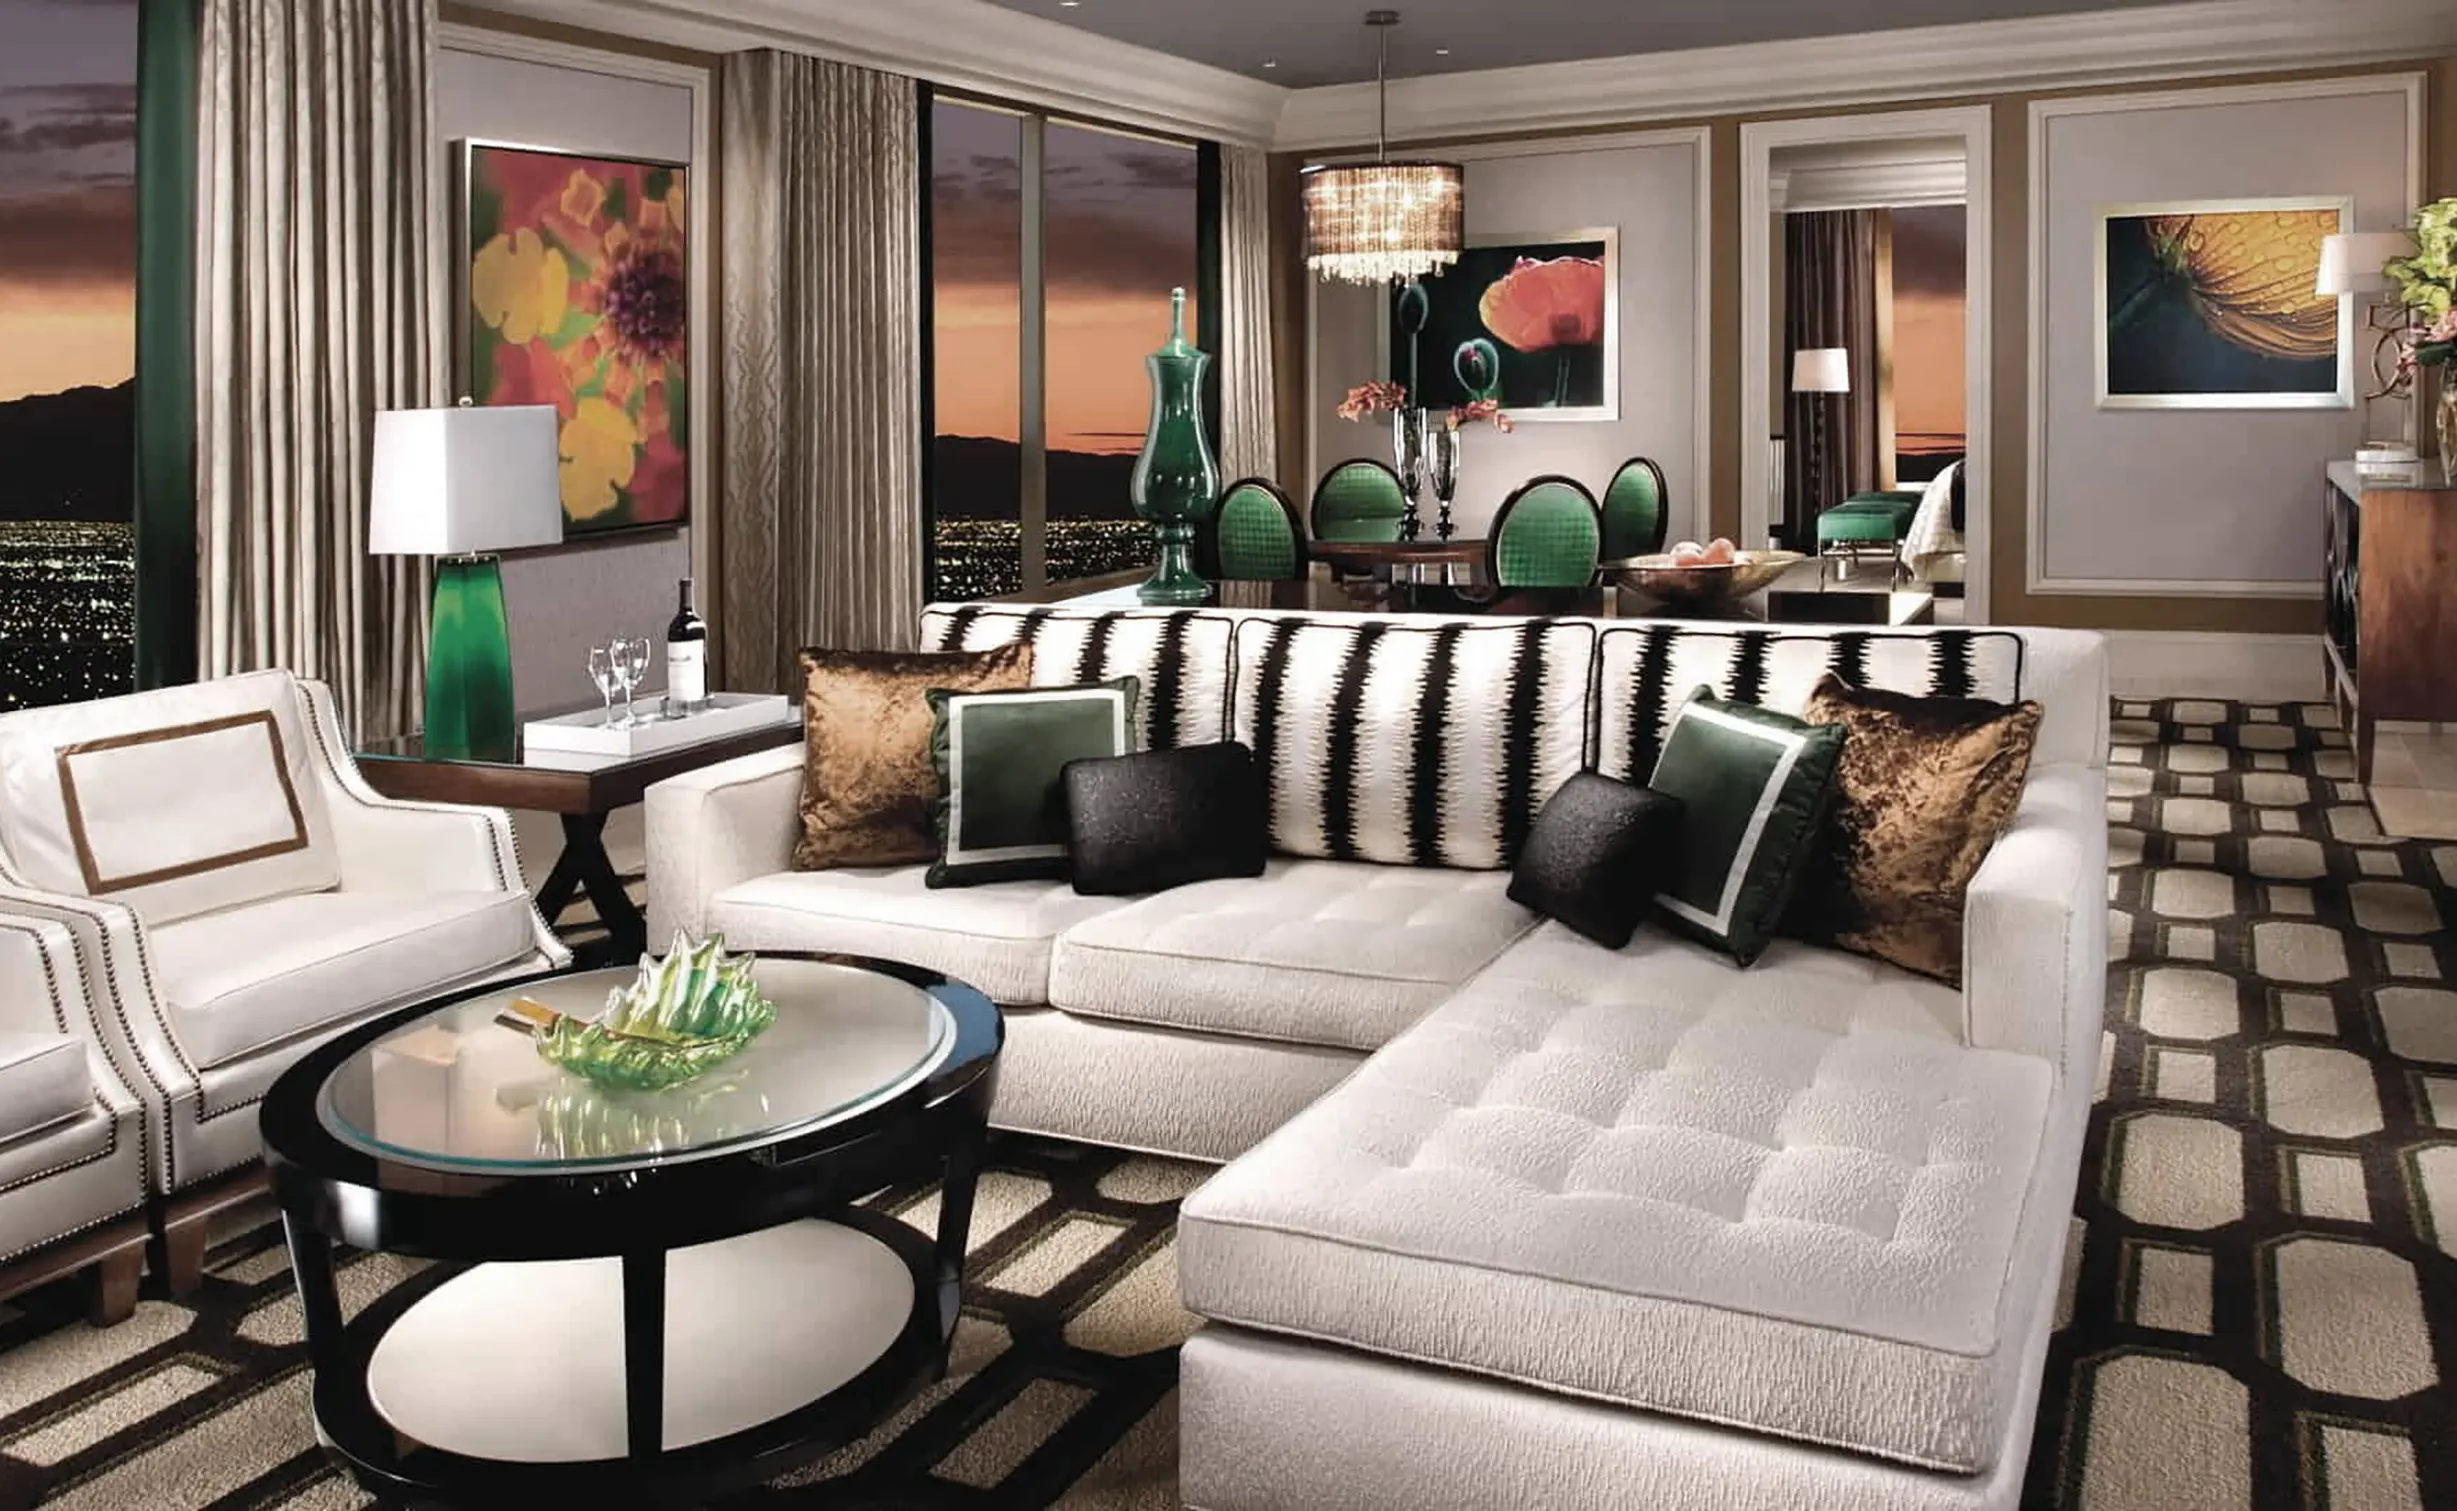 KH-bellagio-hotel-penthouse-suite-living-room-24801088